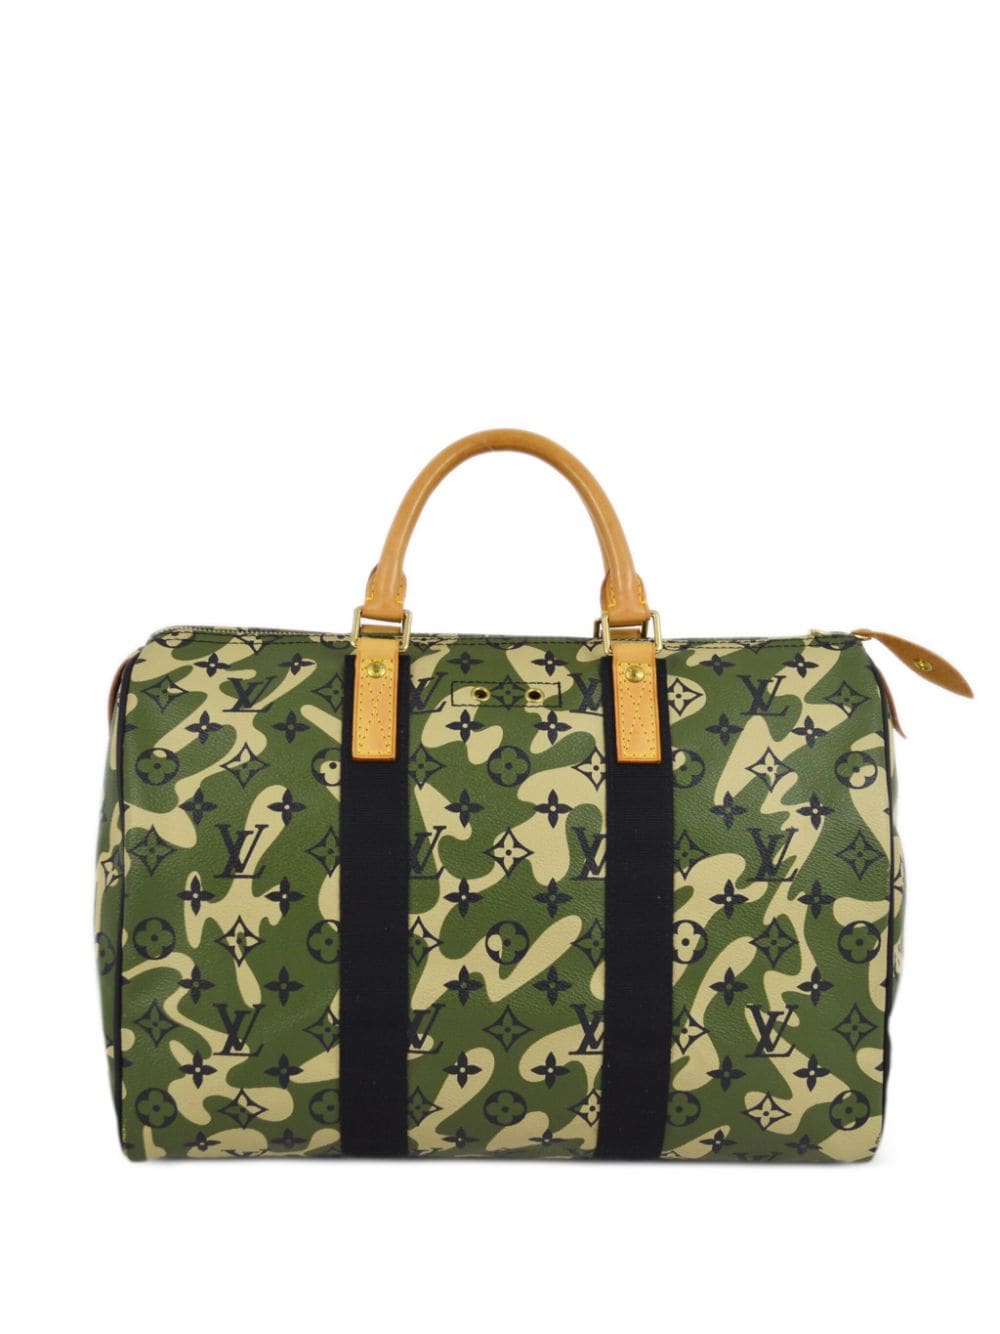 Pre-owned Louis Vuitton 2008 Monogramouflage Speedy 35 Handbag In 绿色